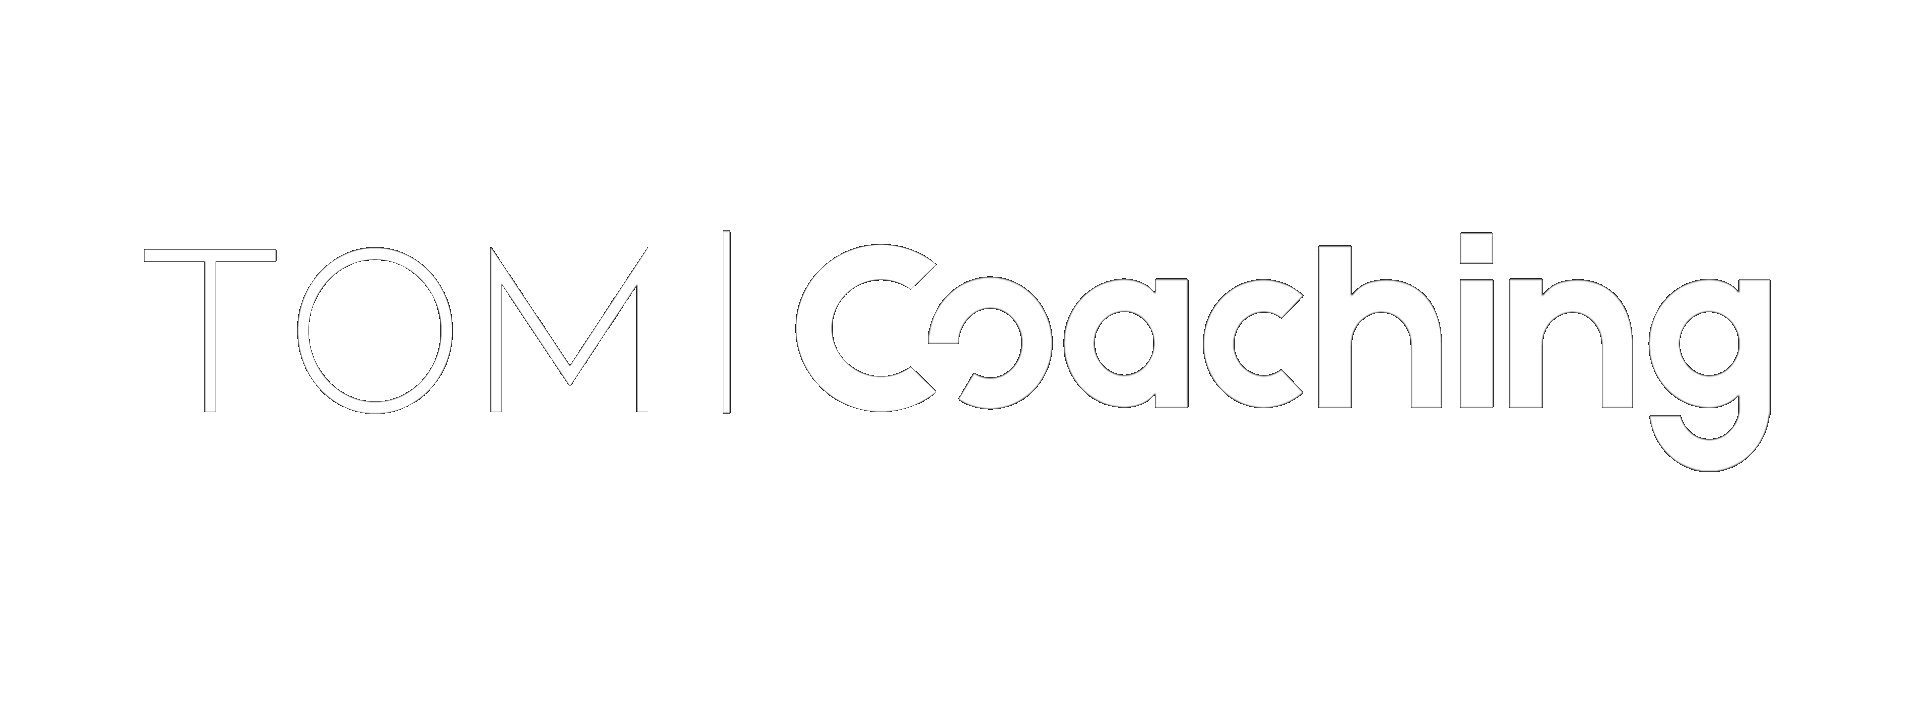 tom coaching logo